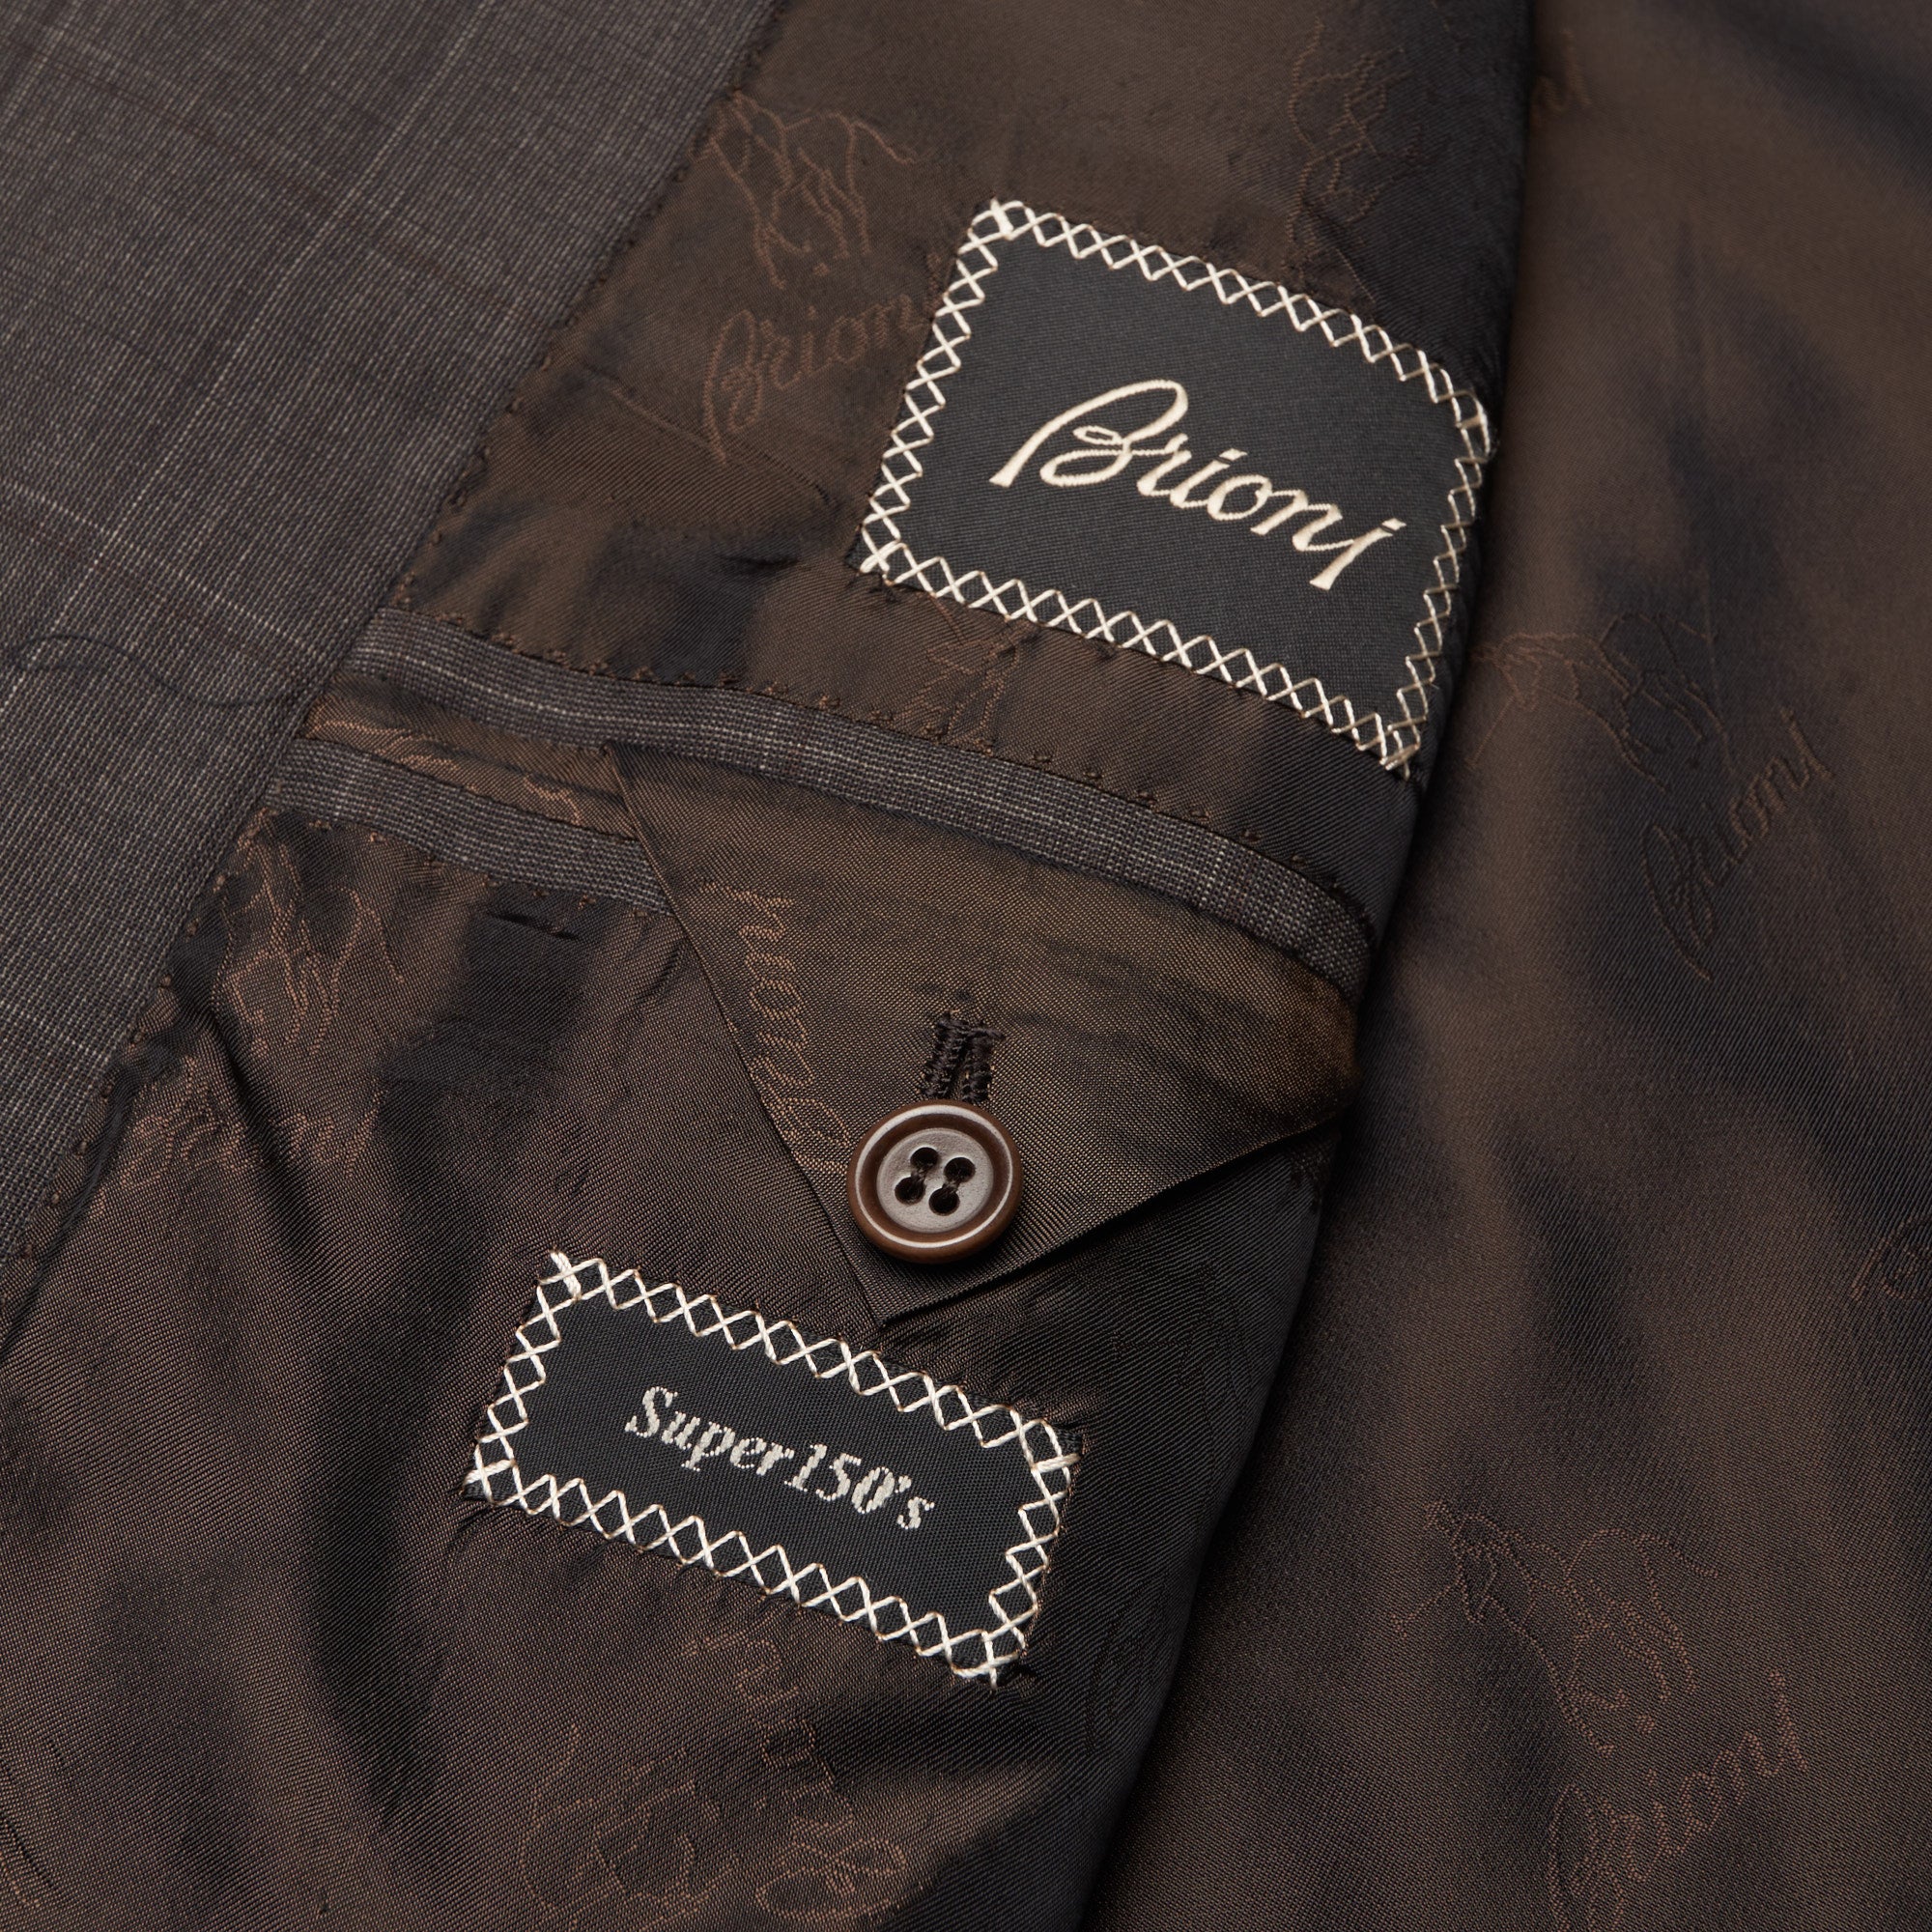 BRIONI "SECOLO" Handmade Gray Plaid Wool Super 150' Suit EU 52 NEW US 42